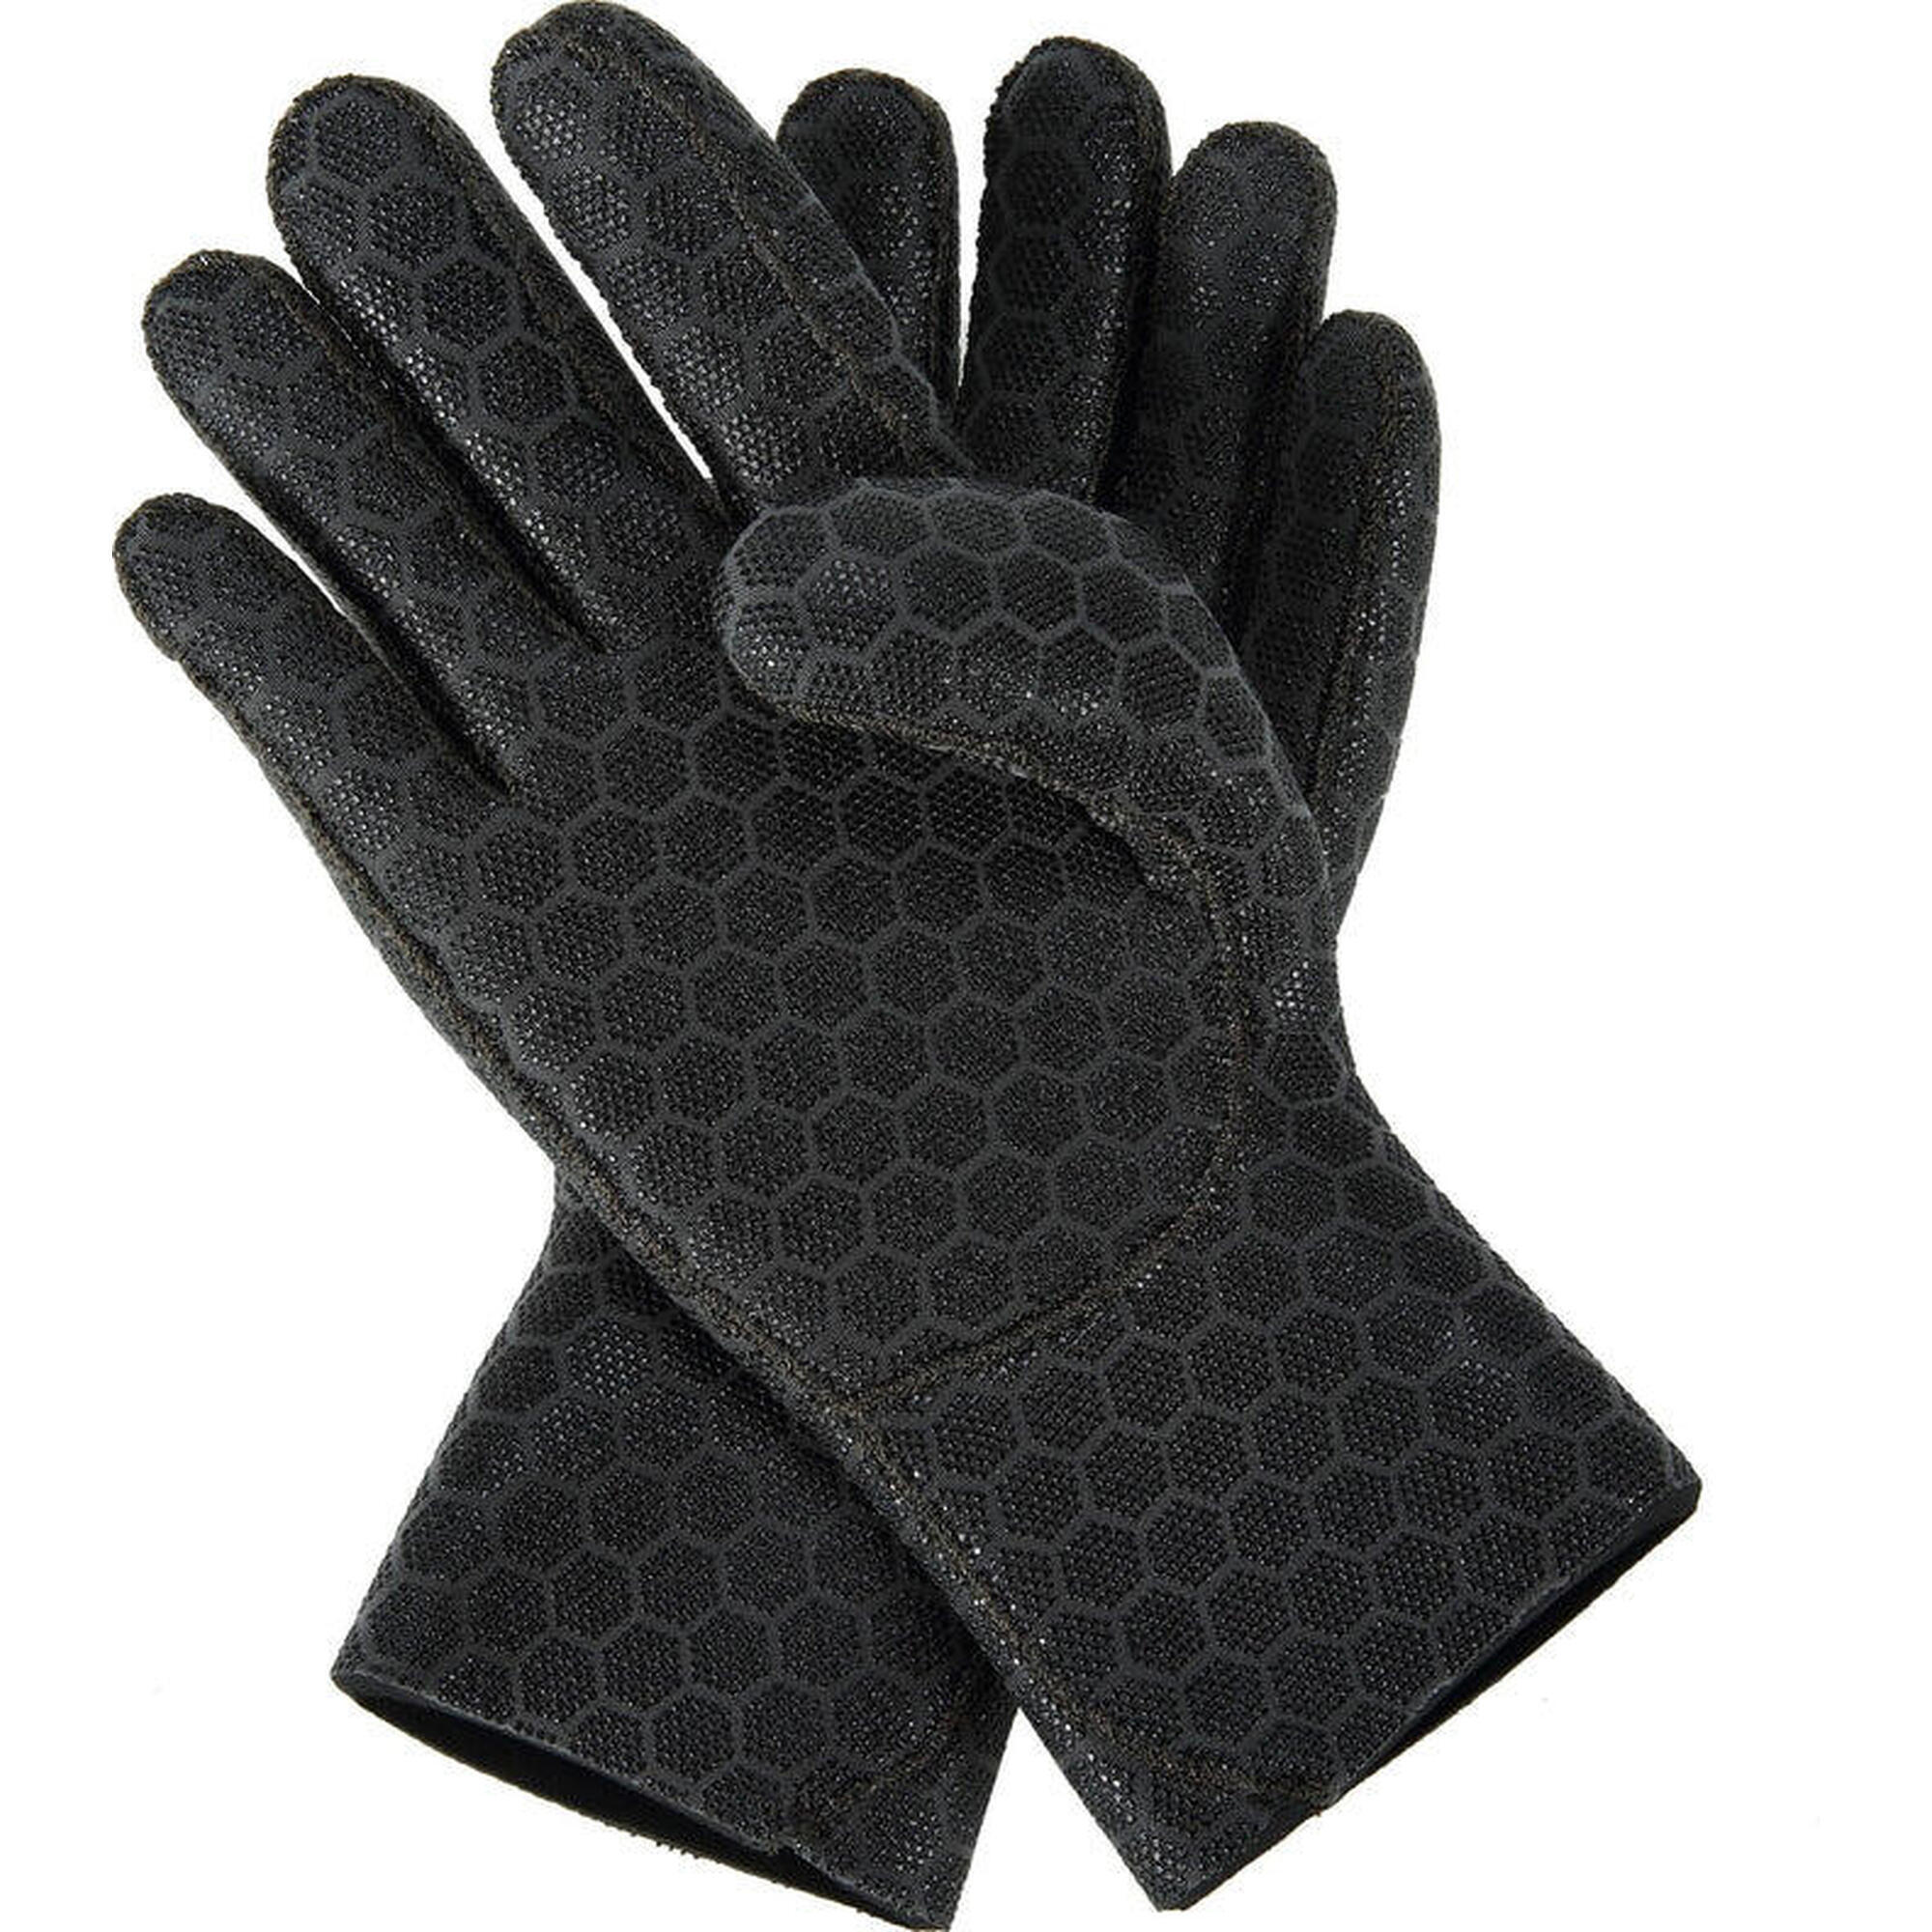 High Stretch Adult Scuba-Diving Gloves - Black M